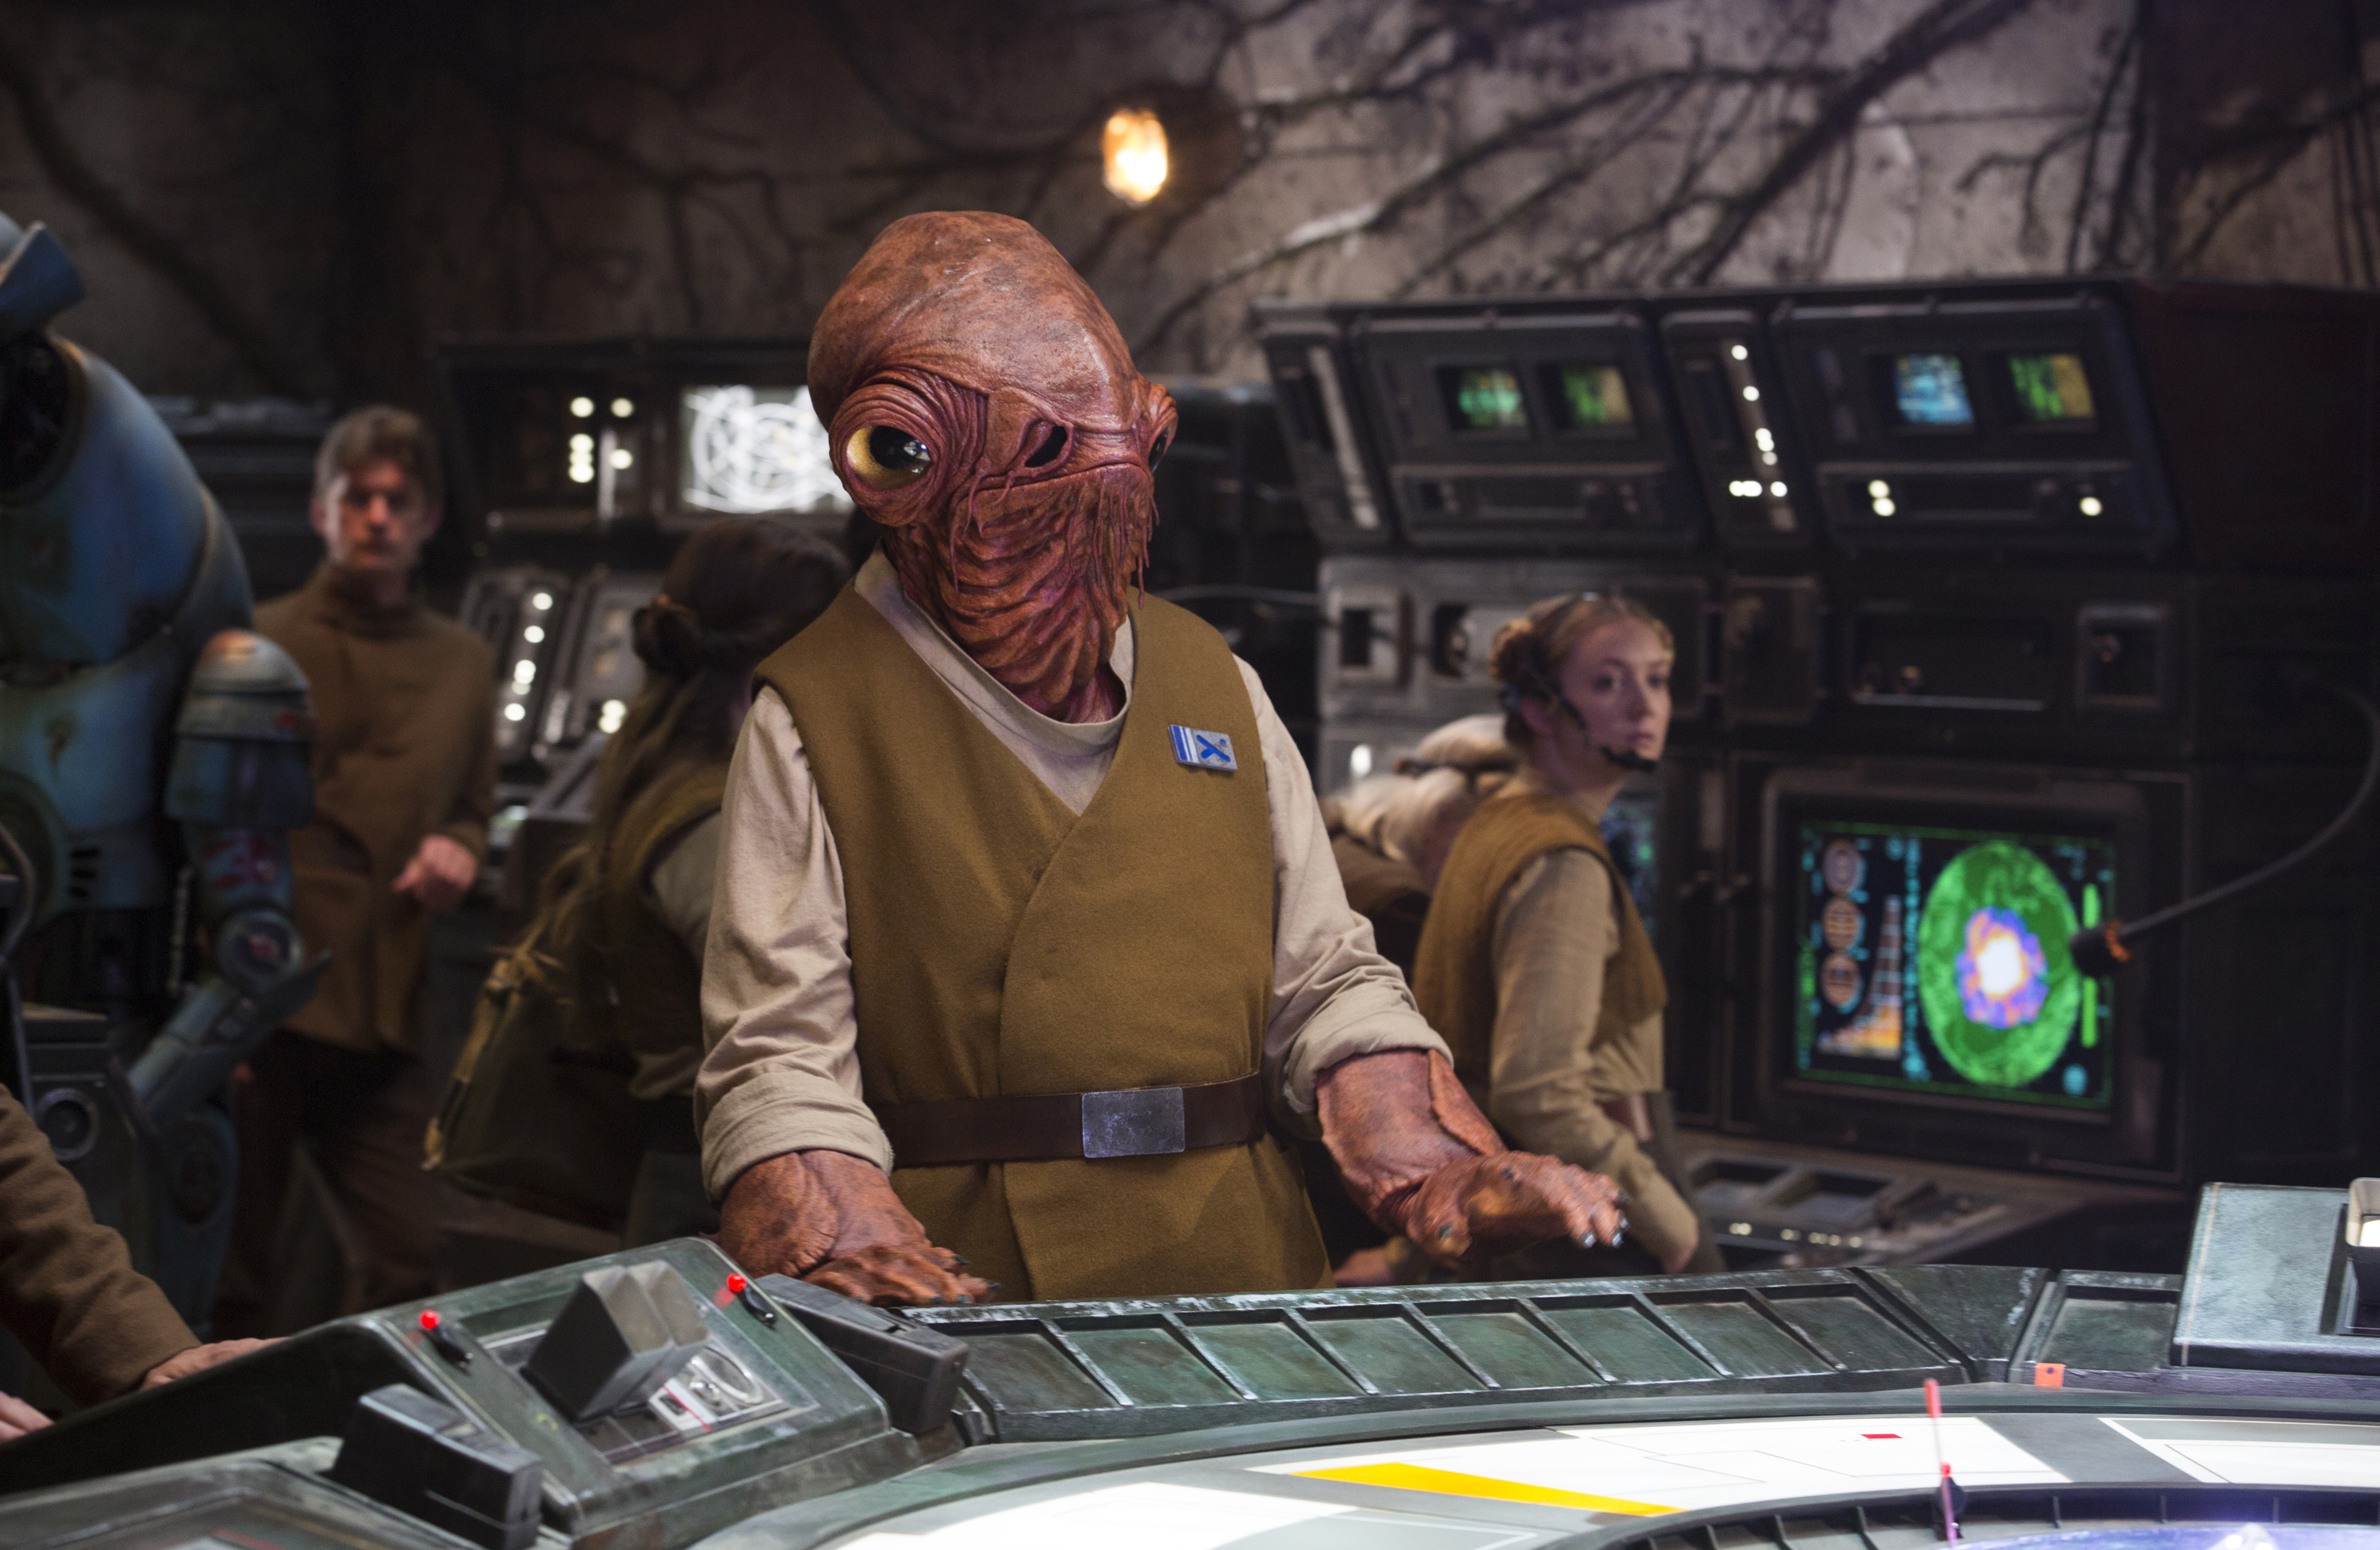 Star Wars Episode VII: The Force Awakens HD Wallpaper